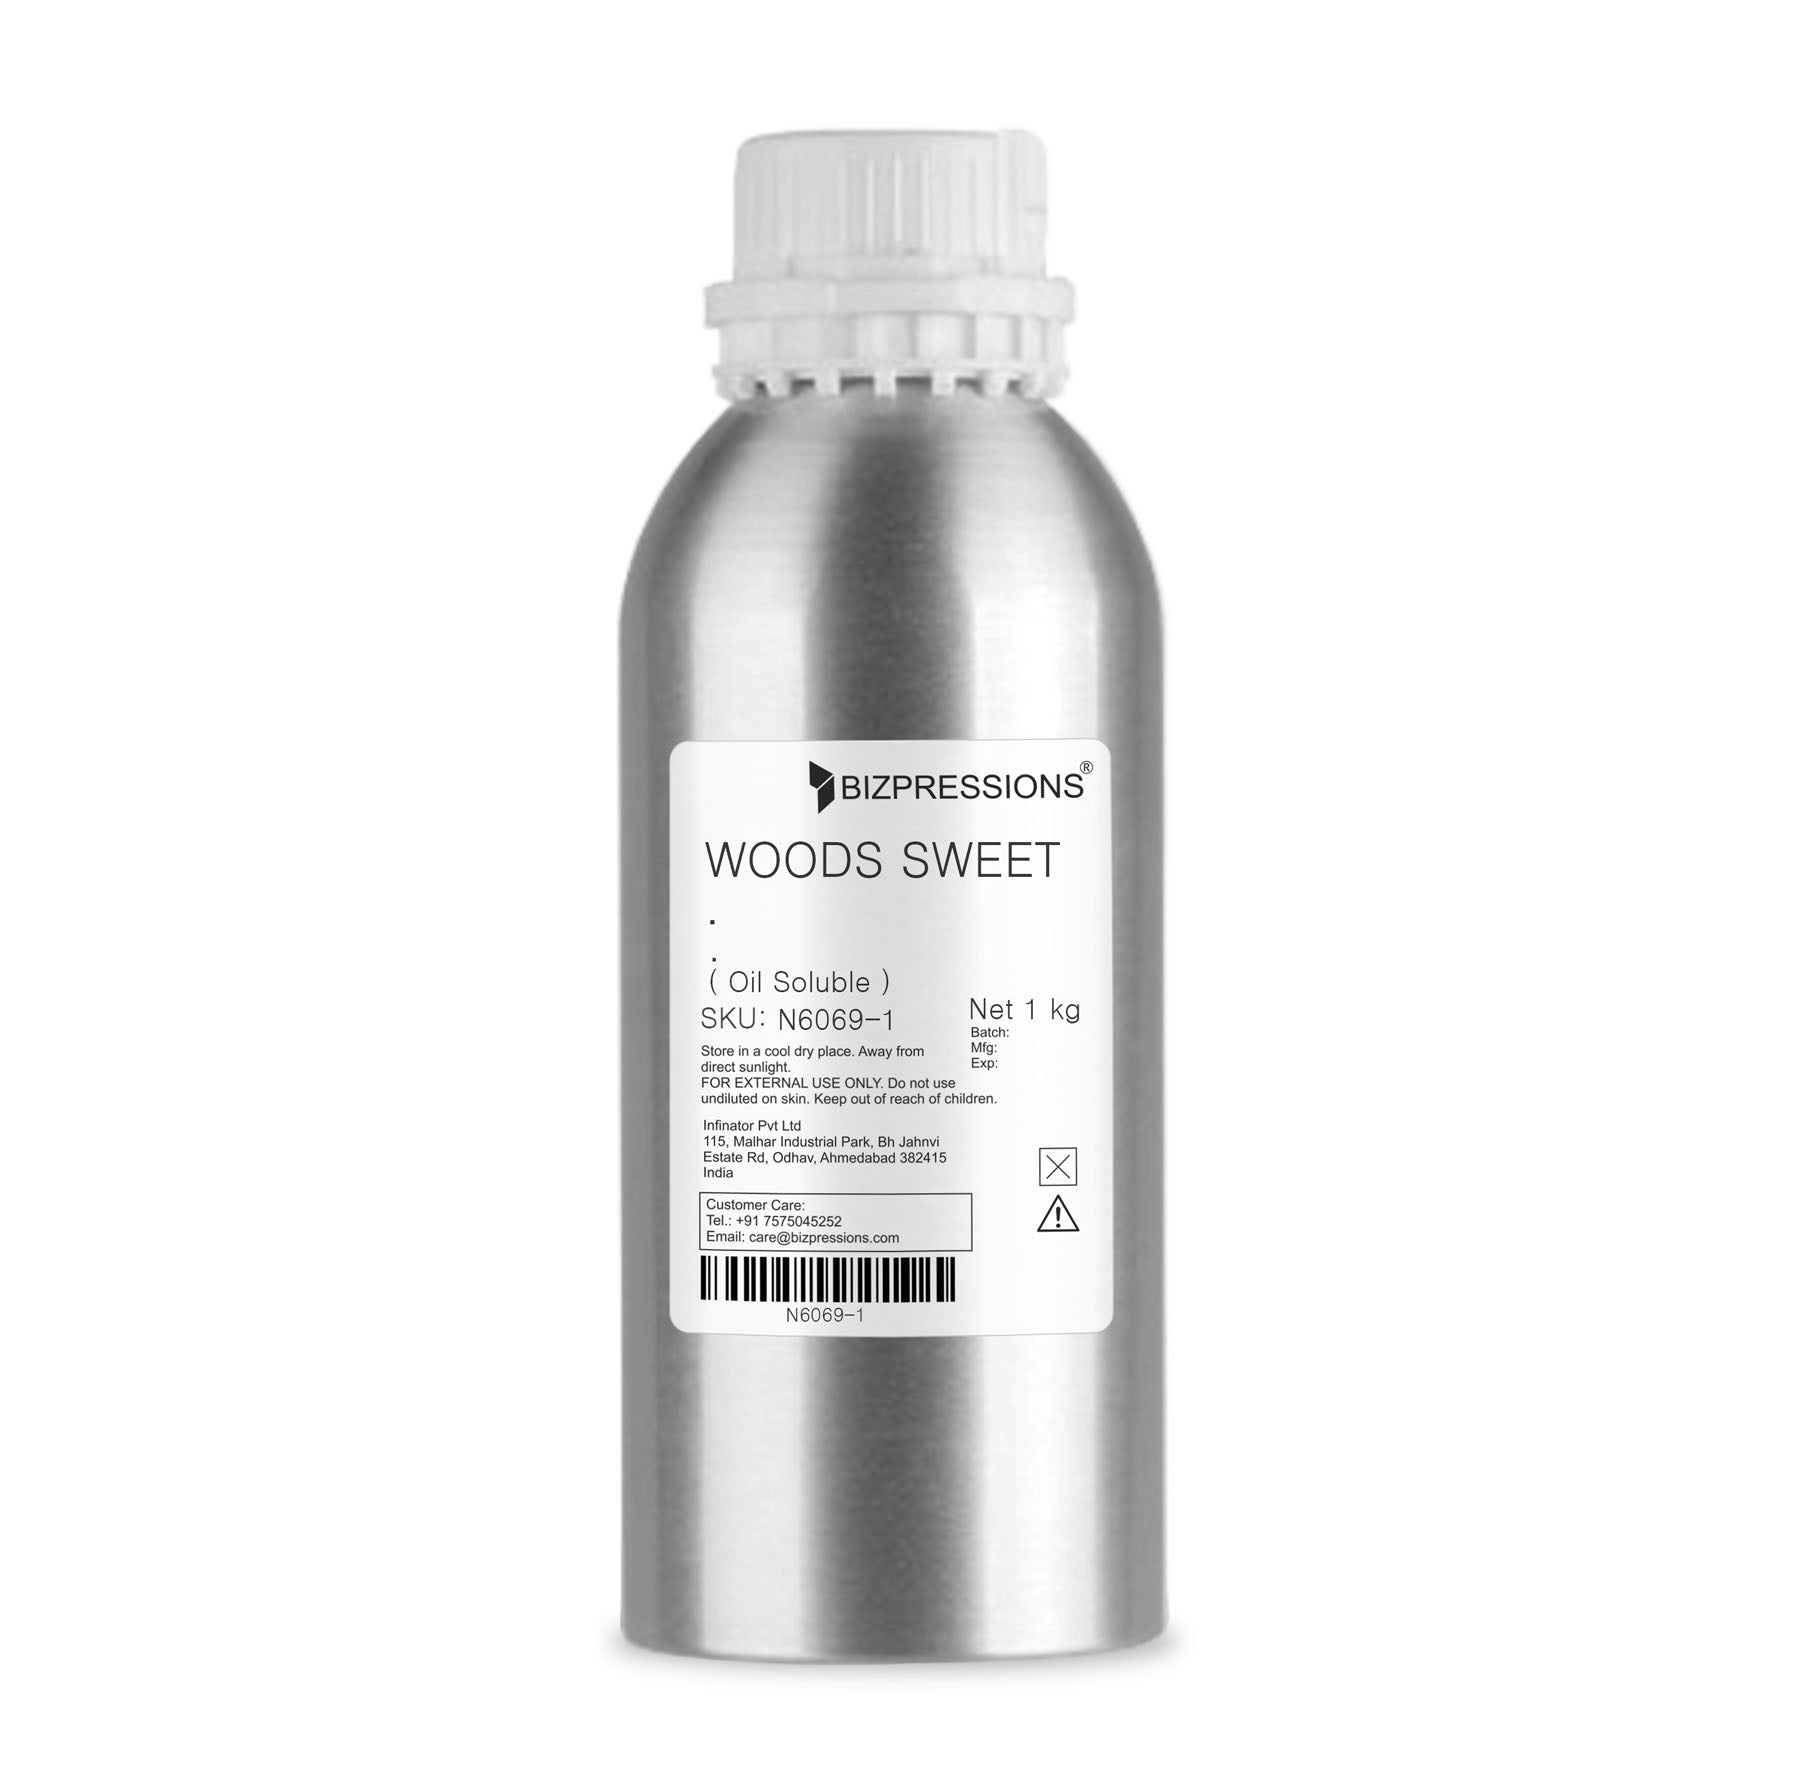 WOODS SWEET - Fragrance ( Oil Soluble ) - 1 kg